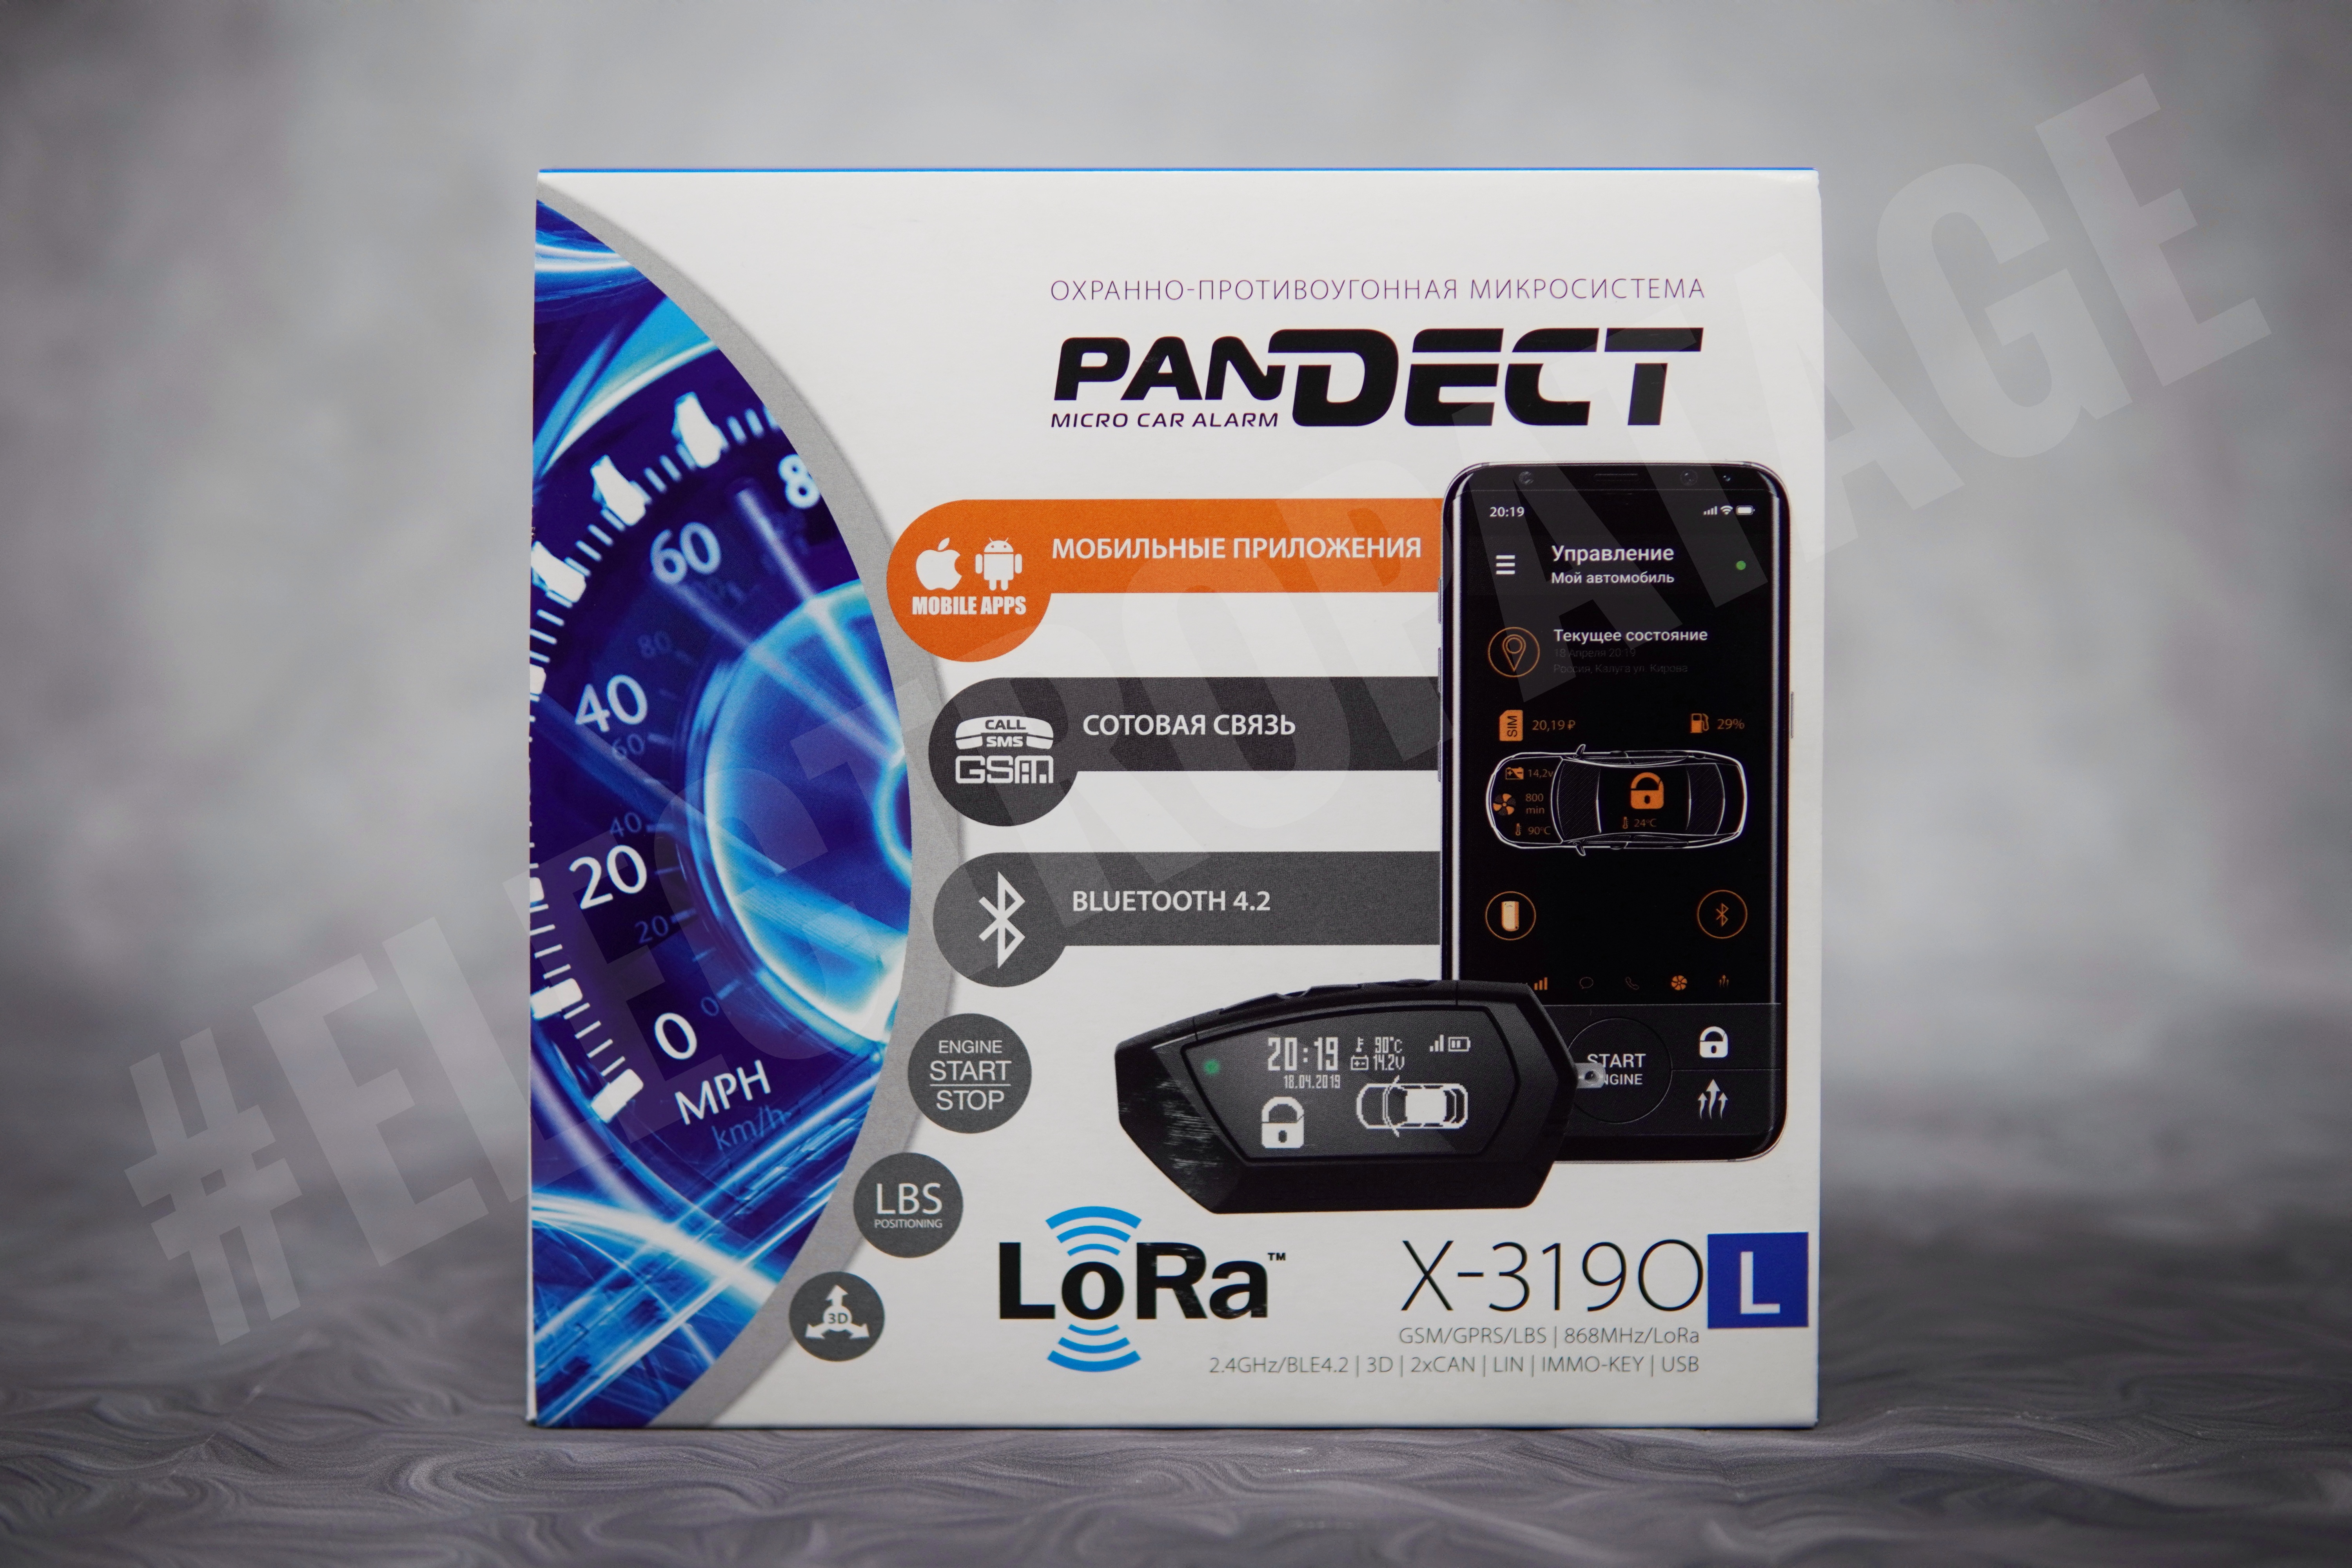 Pandect X-3190 LoRa